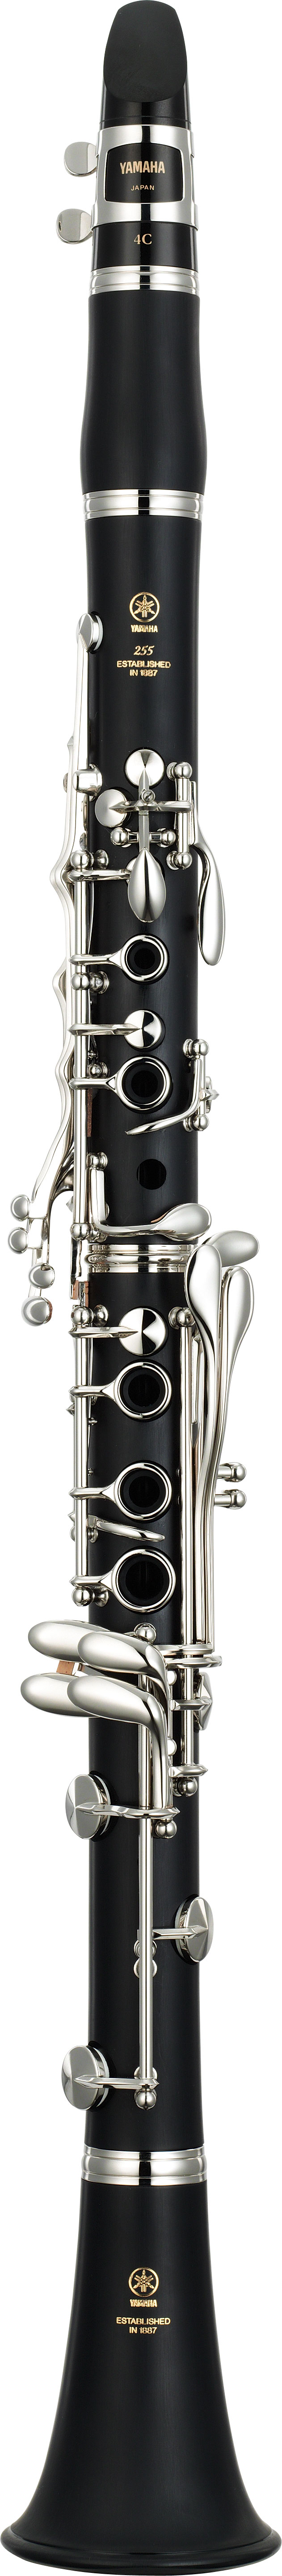 Yamaha-YCL 255 Clarinet